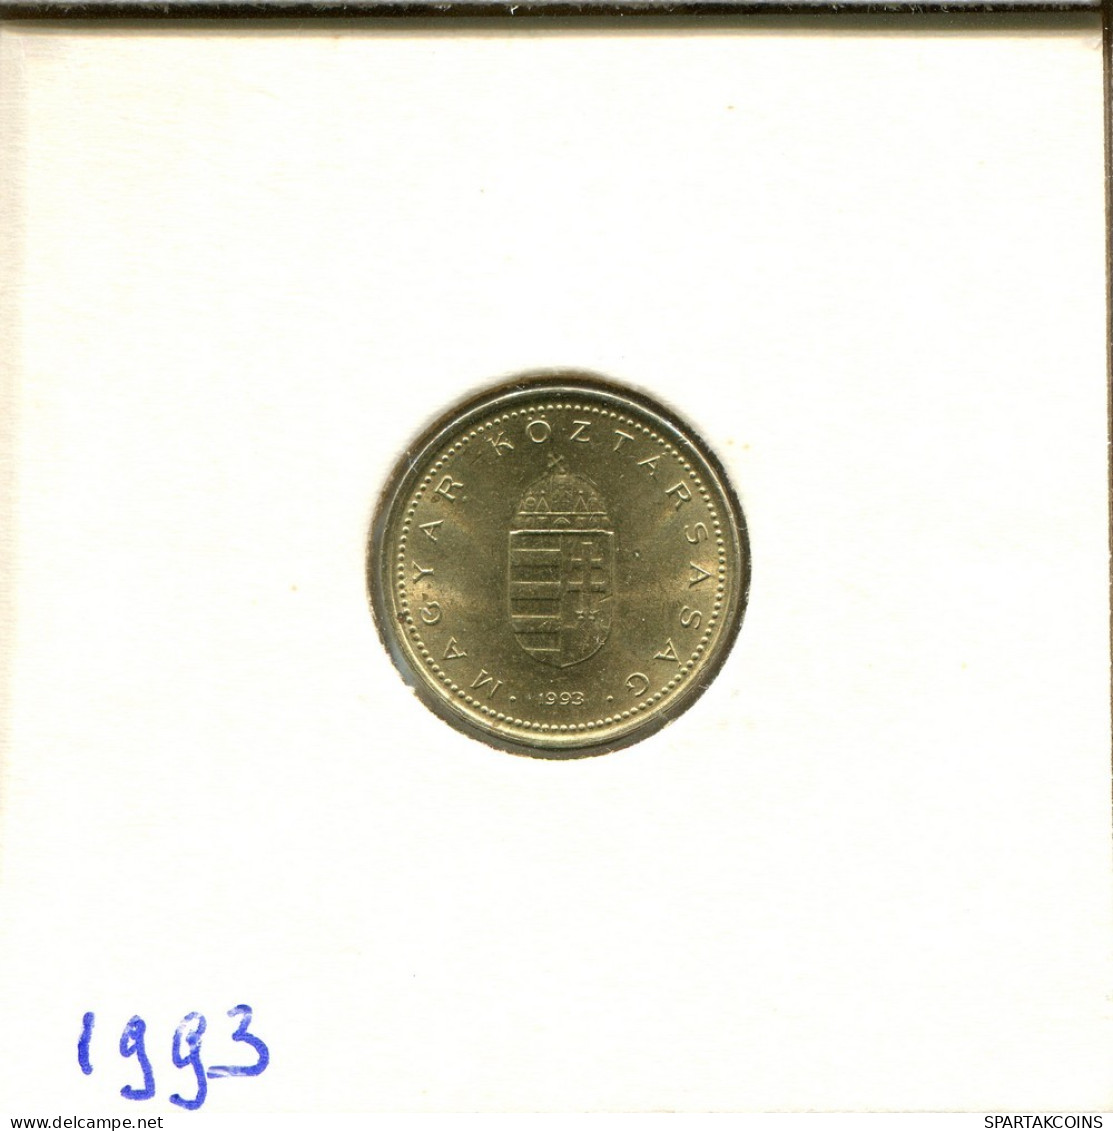 1 FORINT 1993 HUNGARY Coin #AS884.U.A - Hungary